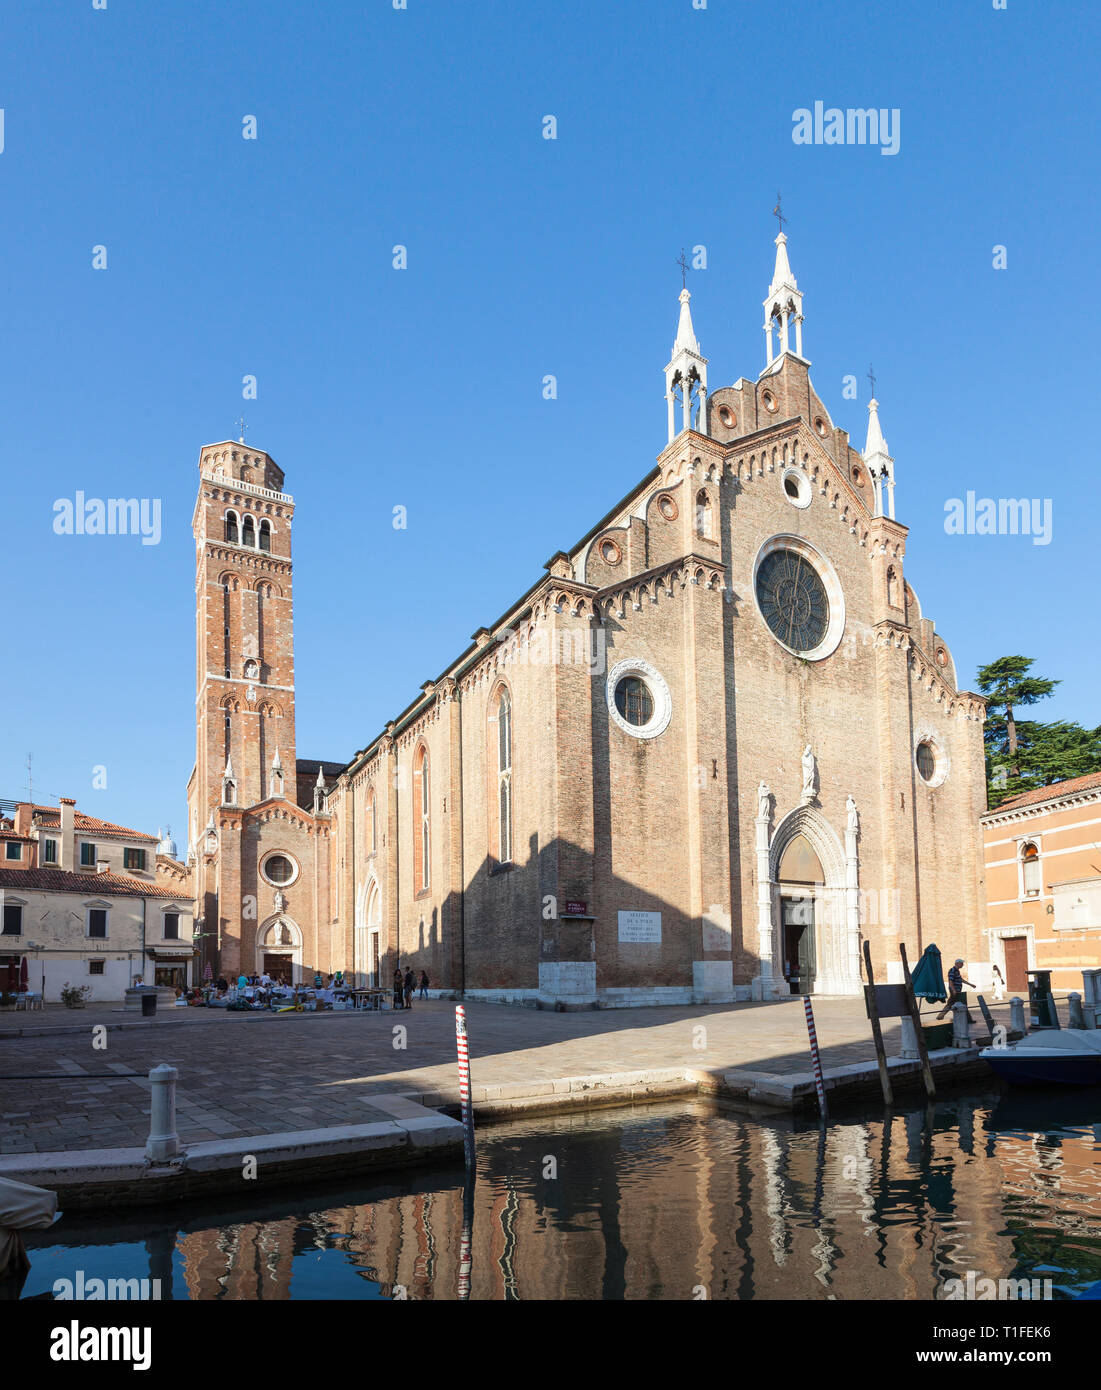 Die Basilika Santa Maria Gloriosa dei Frari, Campo dei Frari mit antiken Markt, San Polo, Venedig, Venetien, Italien. 1492 gotische Fassade mit Reflektion Stockfoto